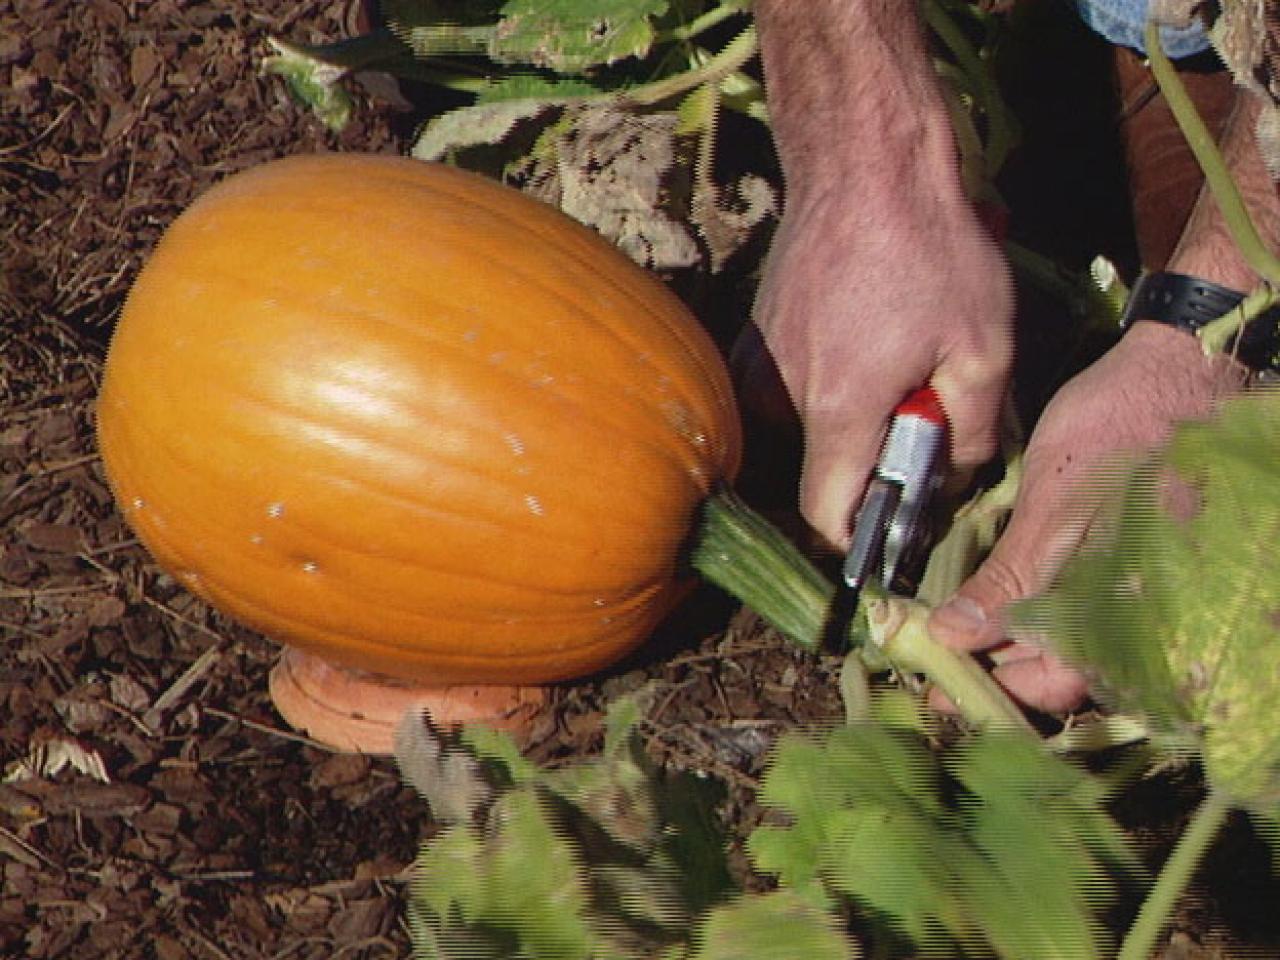 Harvesting Tips for Squash and Pumpkins | DIY